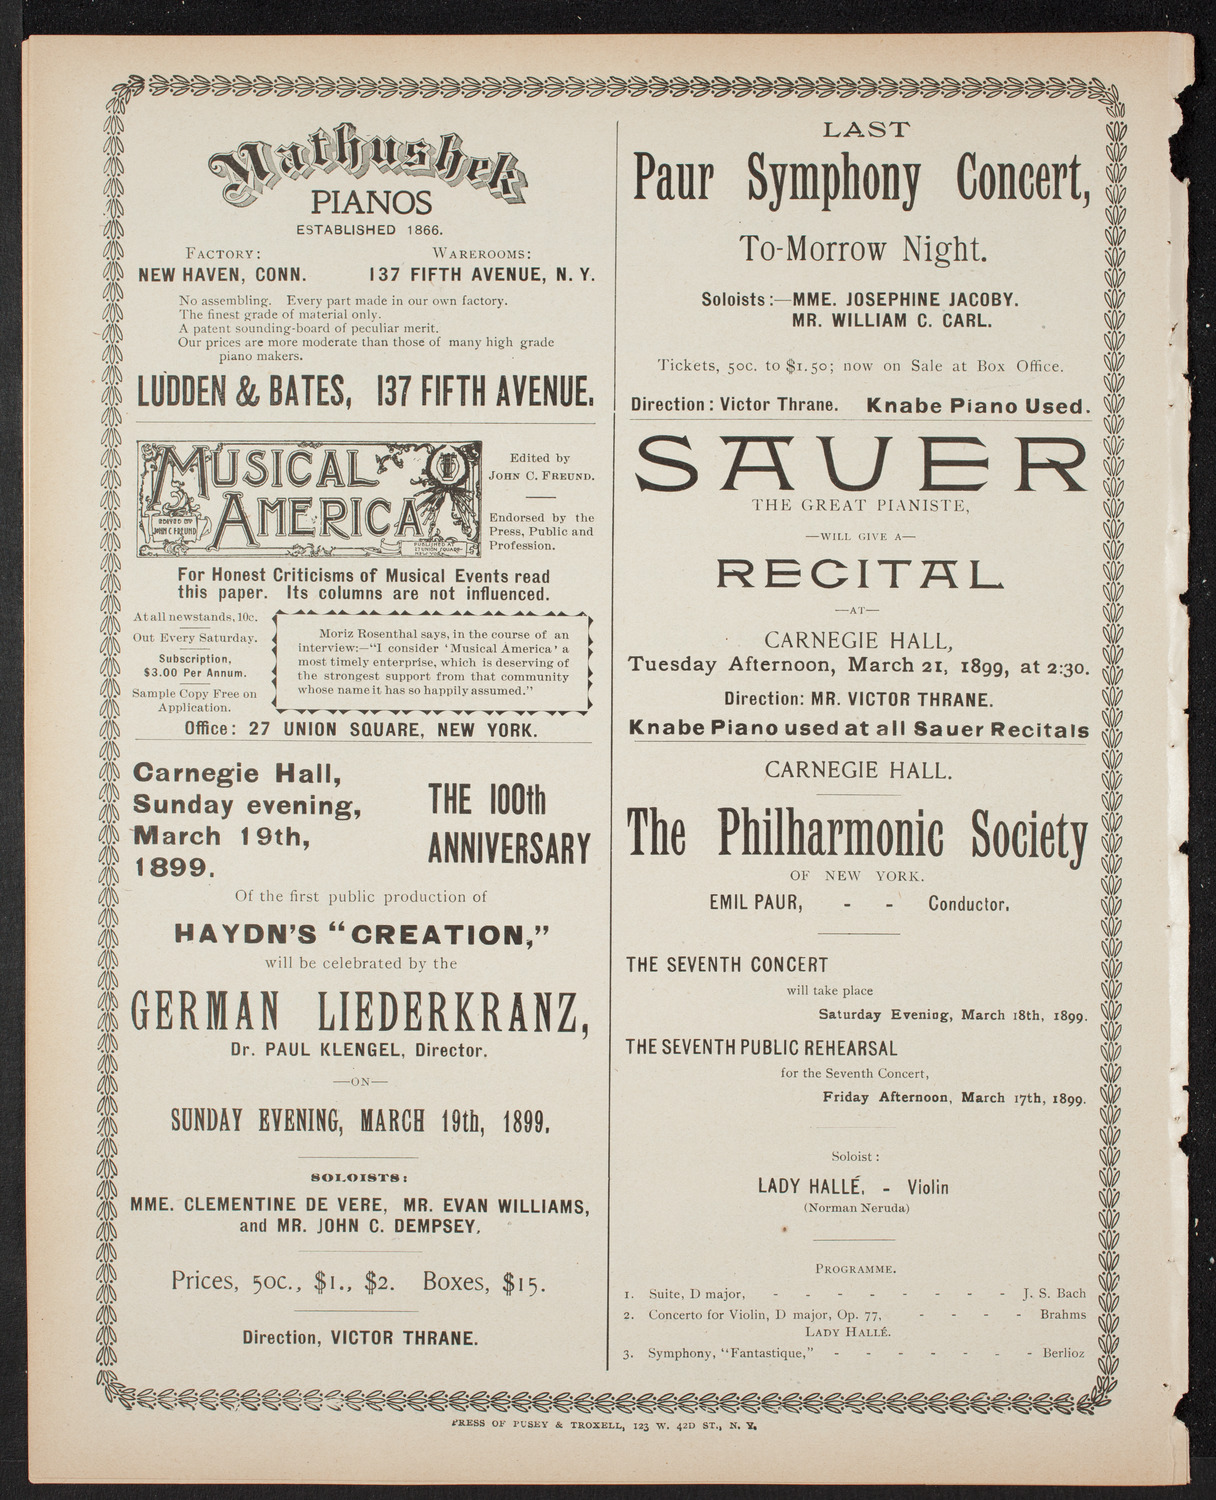 Paur Symphony Orchestra, March 10, 1899, program page 8